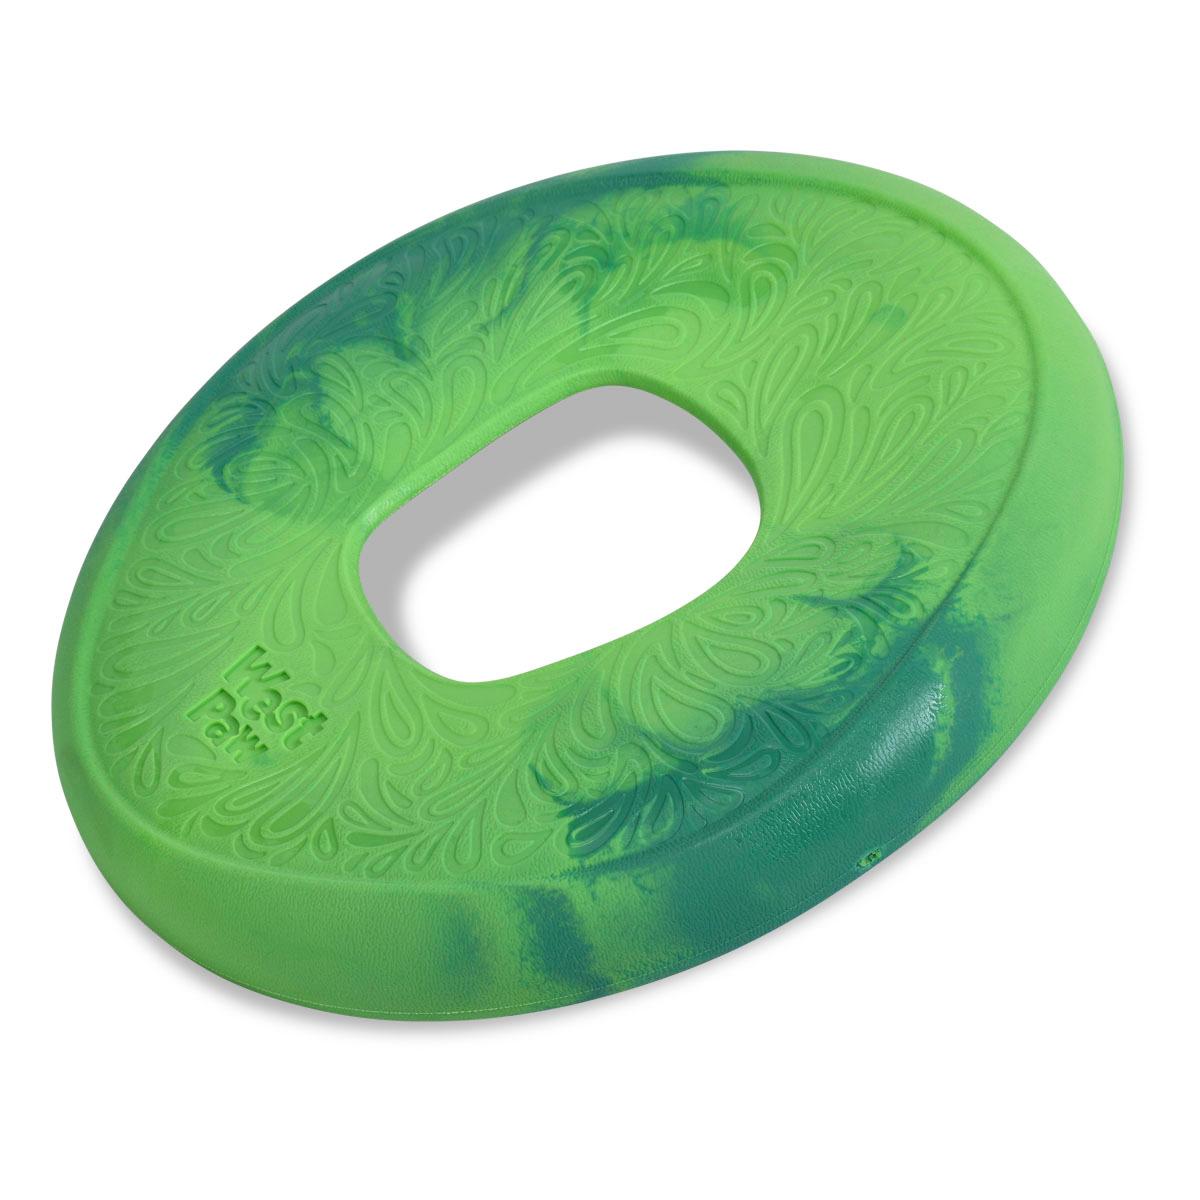 West Paw Seaflex Sailz Dog Toy - Emerald